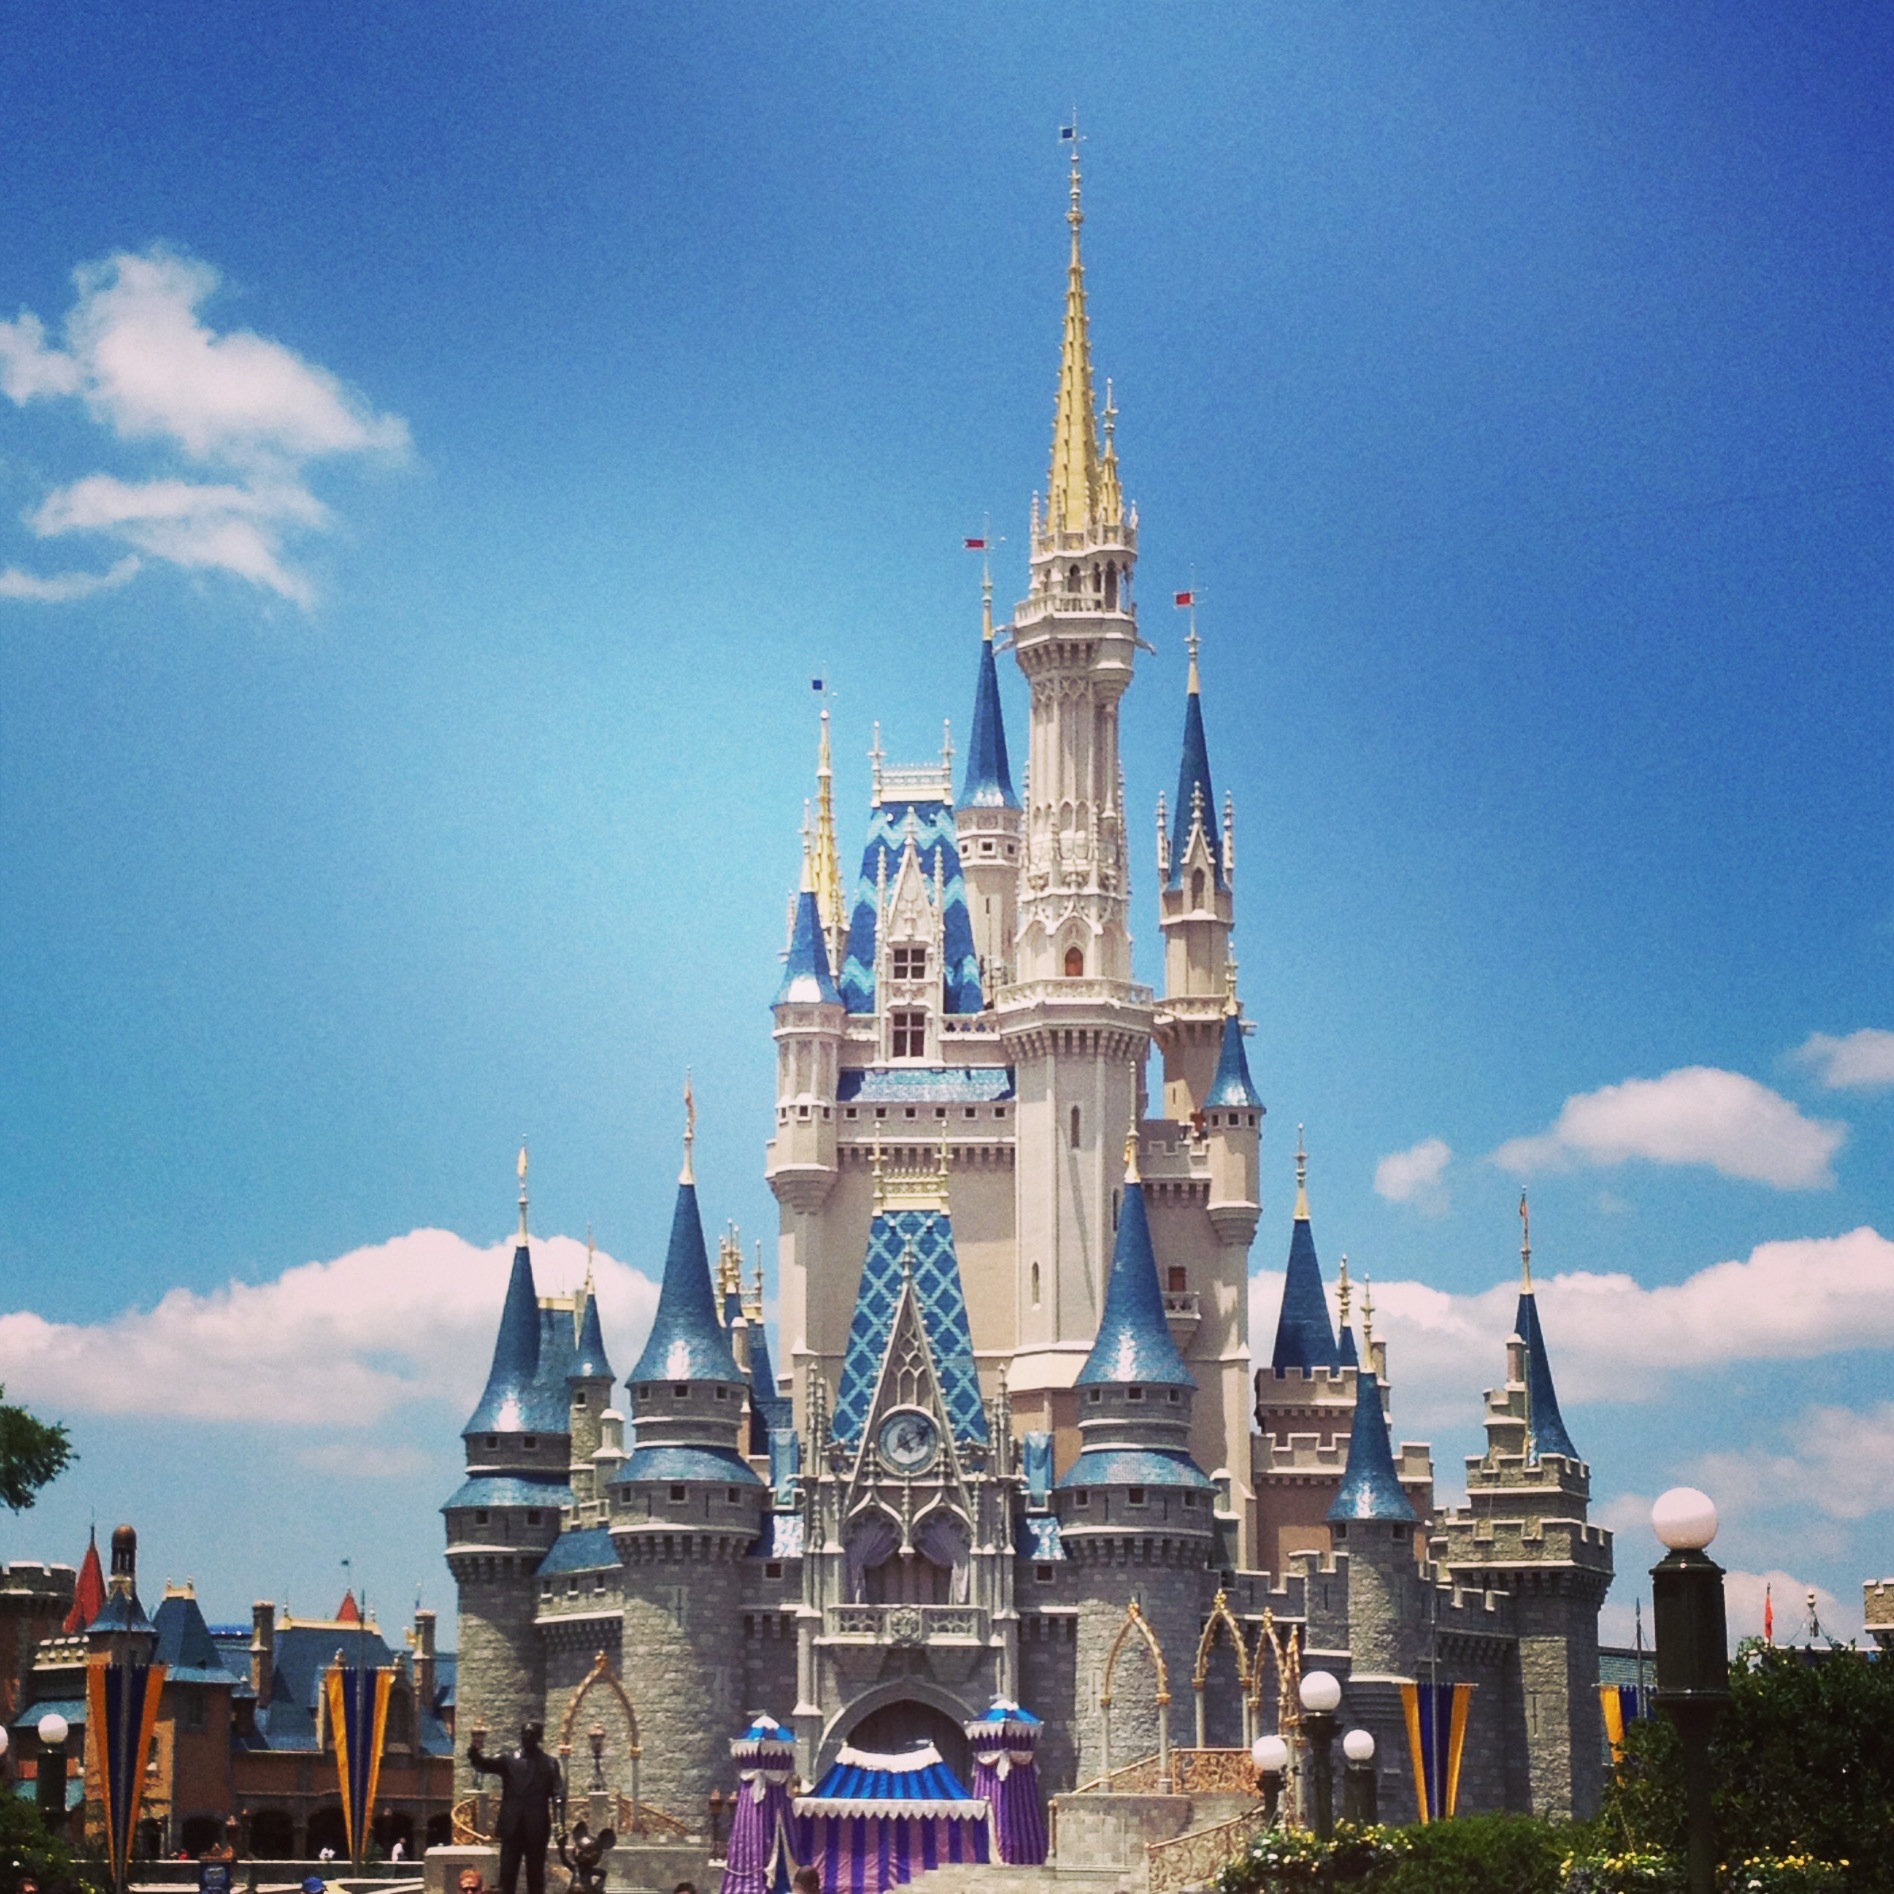 Disney World 2013: Magic Kingdom